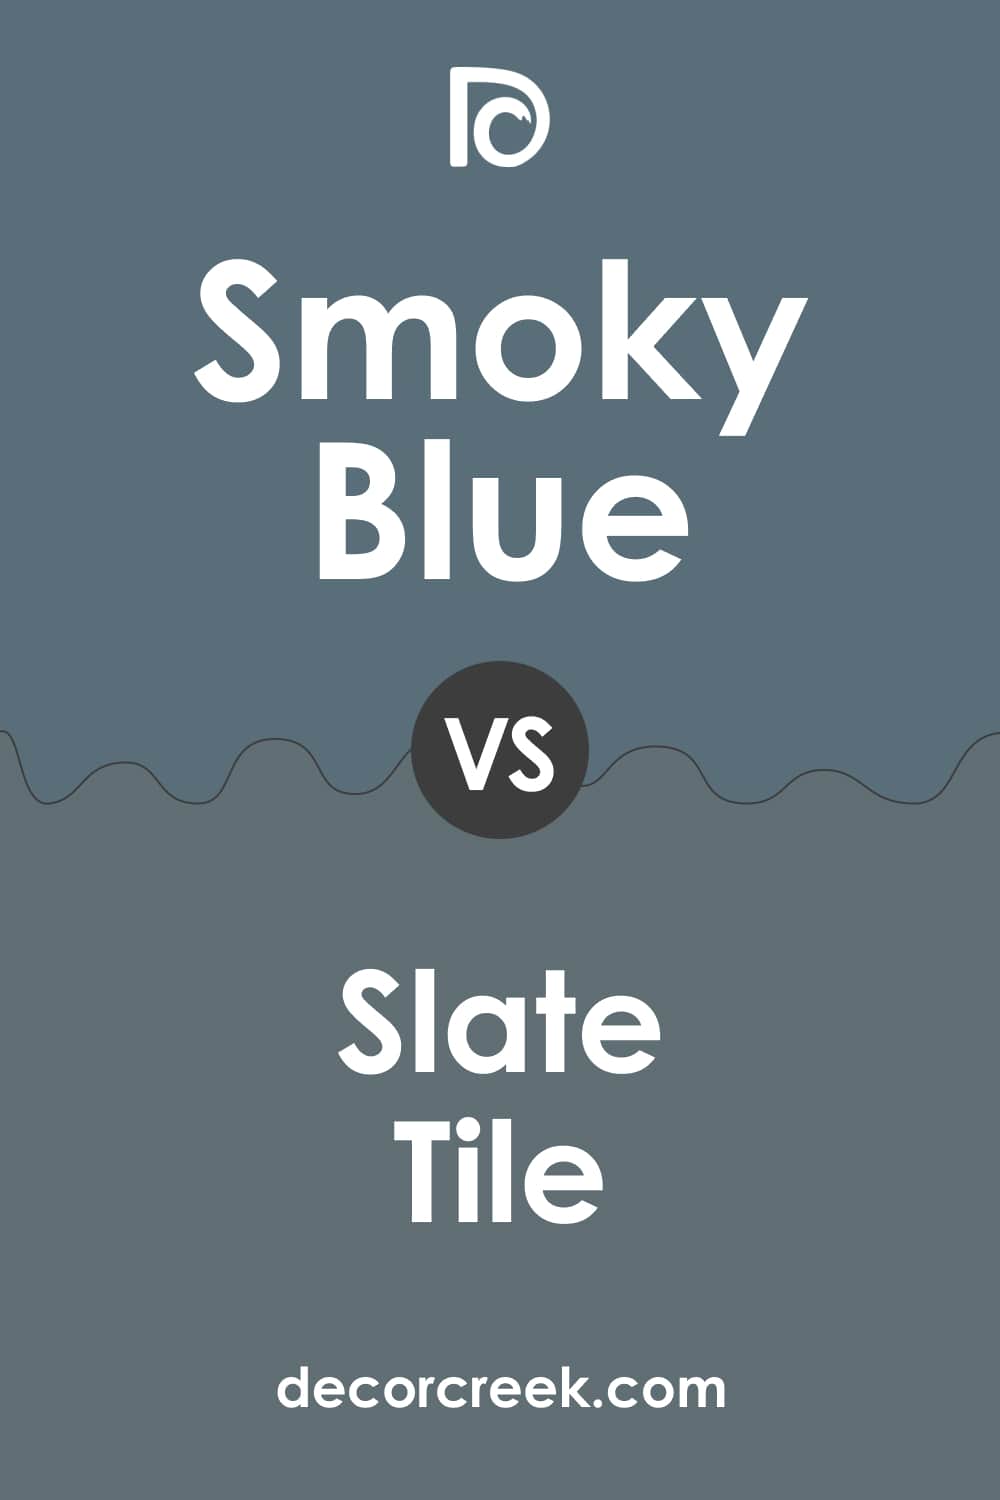 Smoky Blue vs. Slate Tile